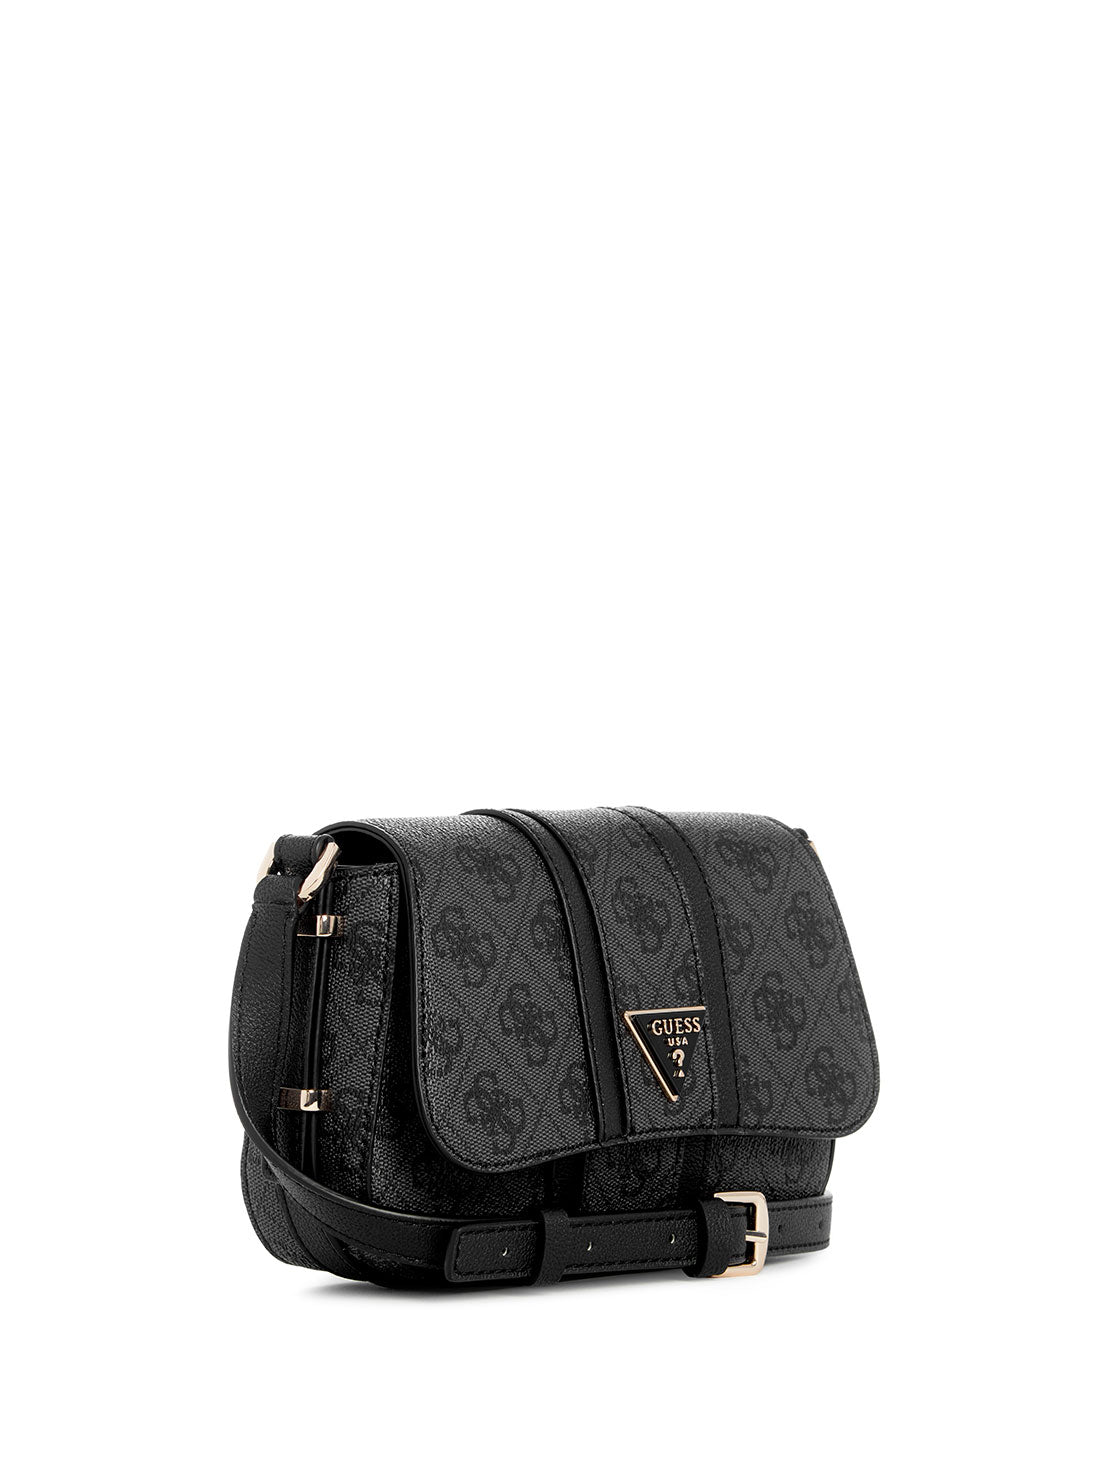 GUESS Black Logo Noreen Mini Crossbody Bag side view